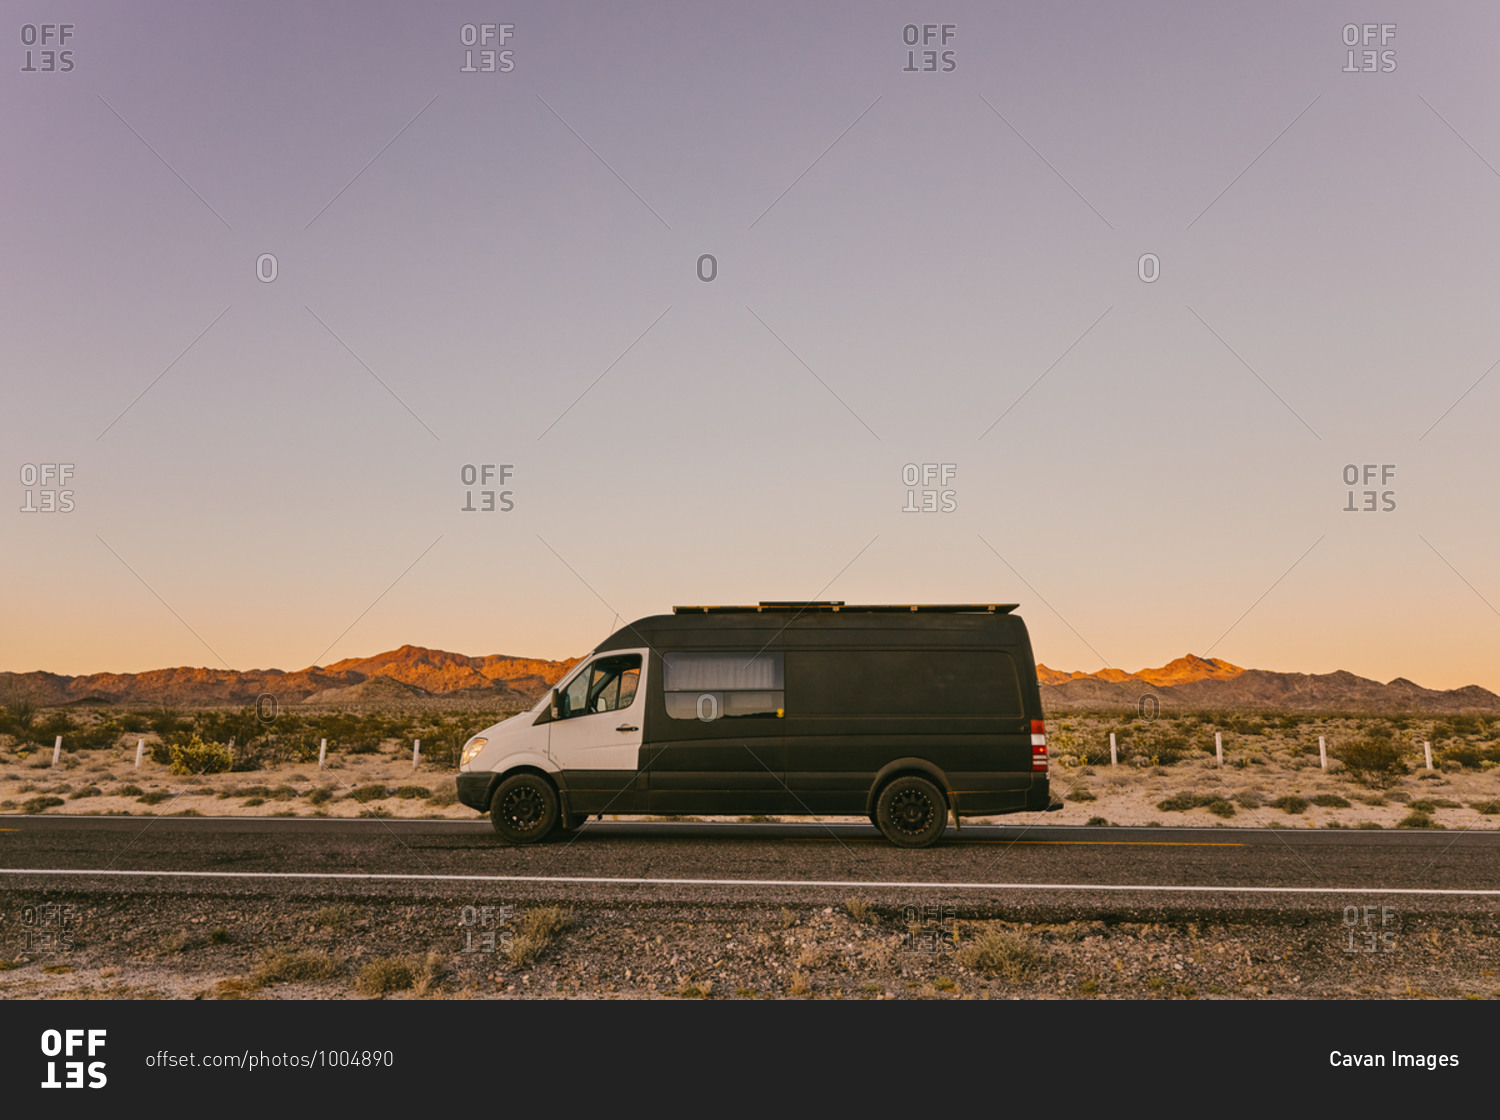 Camper van on highway during sunset in desert of Baja, Mexico.